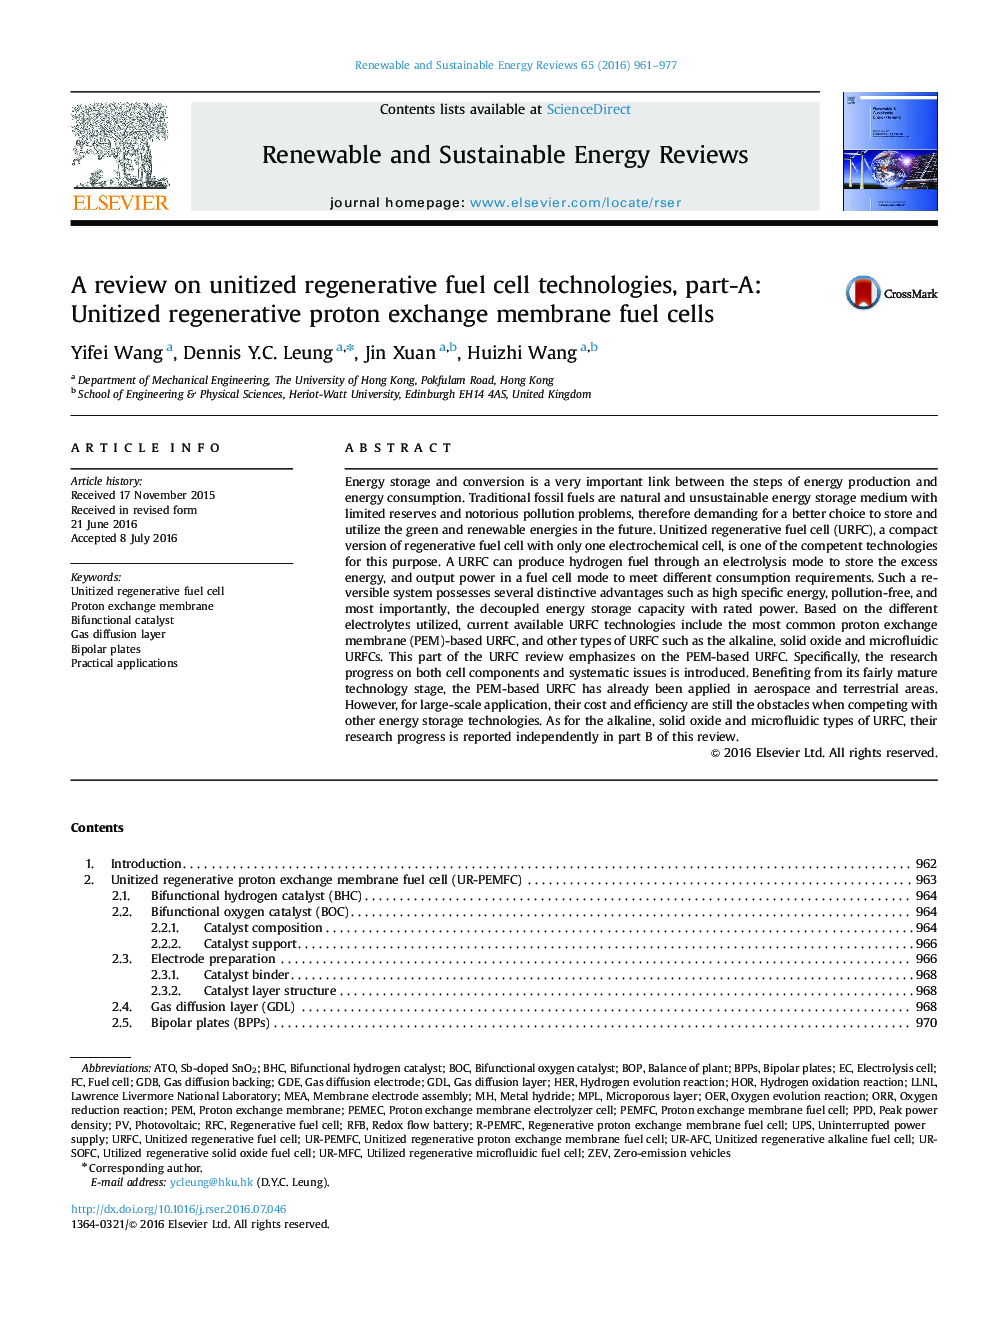 A review on unitized regenerative fuel cell technologies, part-A: Unitized regenerative proton exchange membrane fuel cells